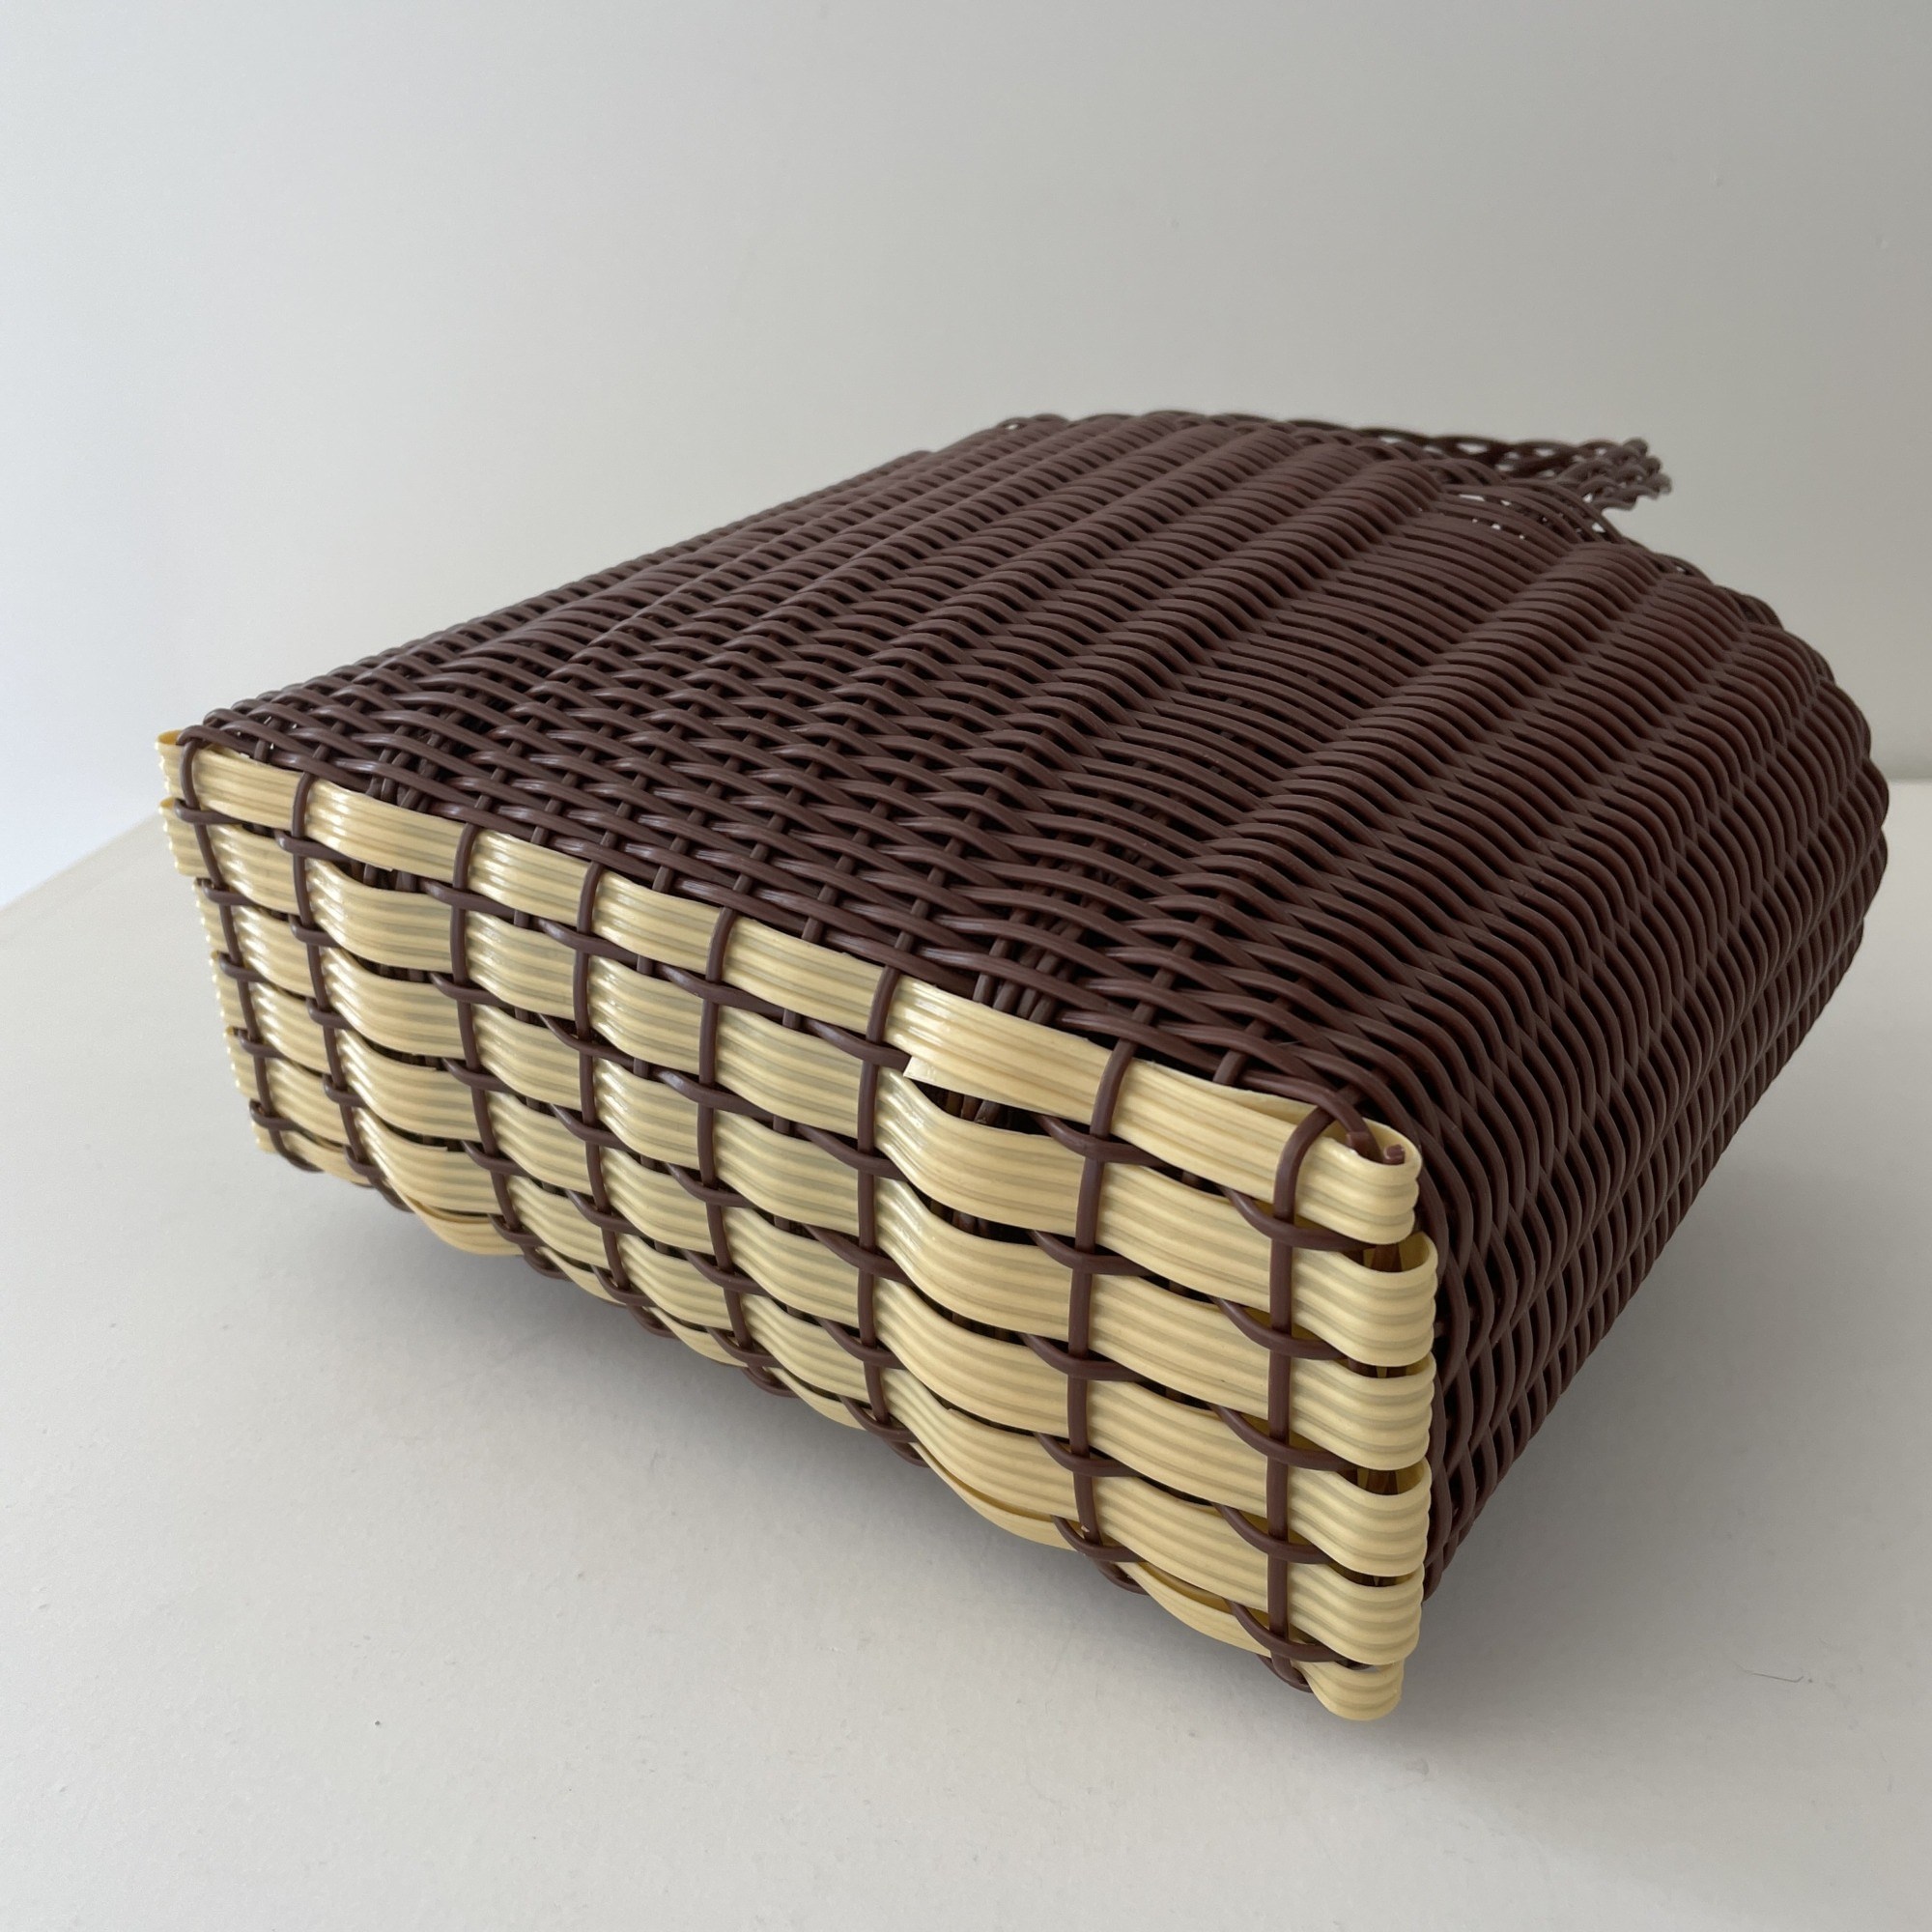 PALOROSAOthers Mini Tote Basket / Chocolate